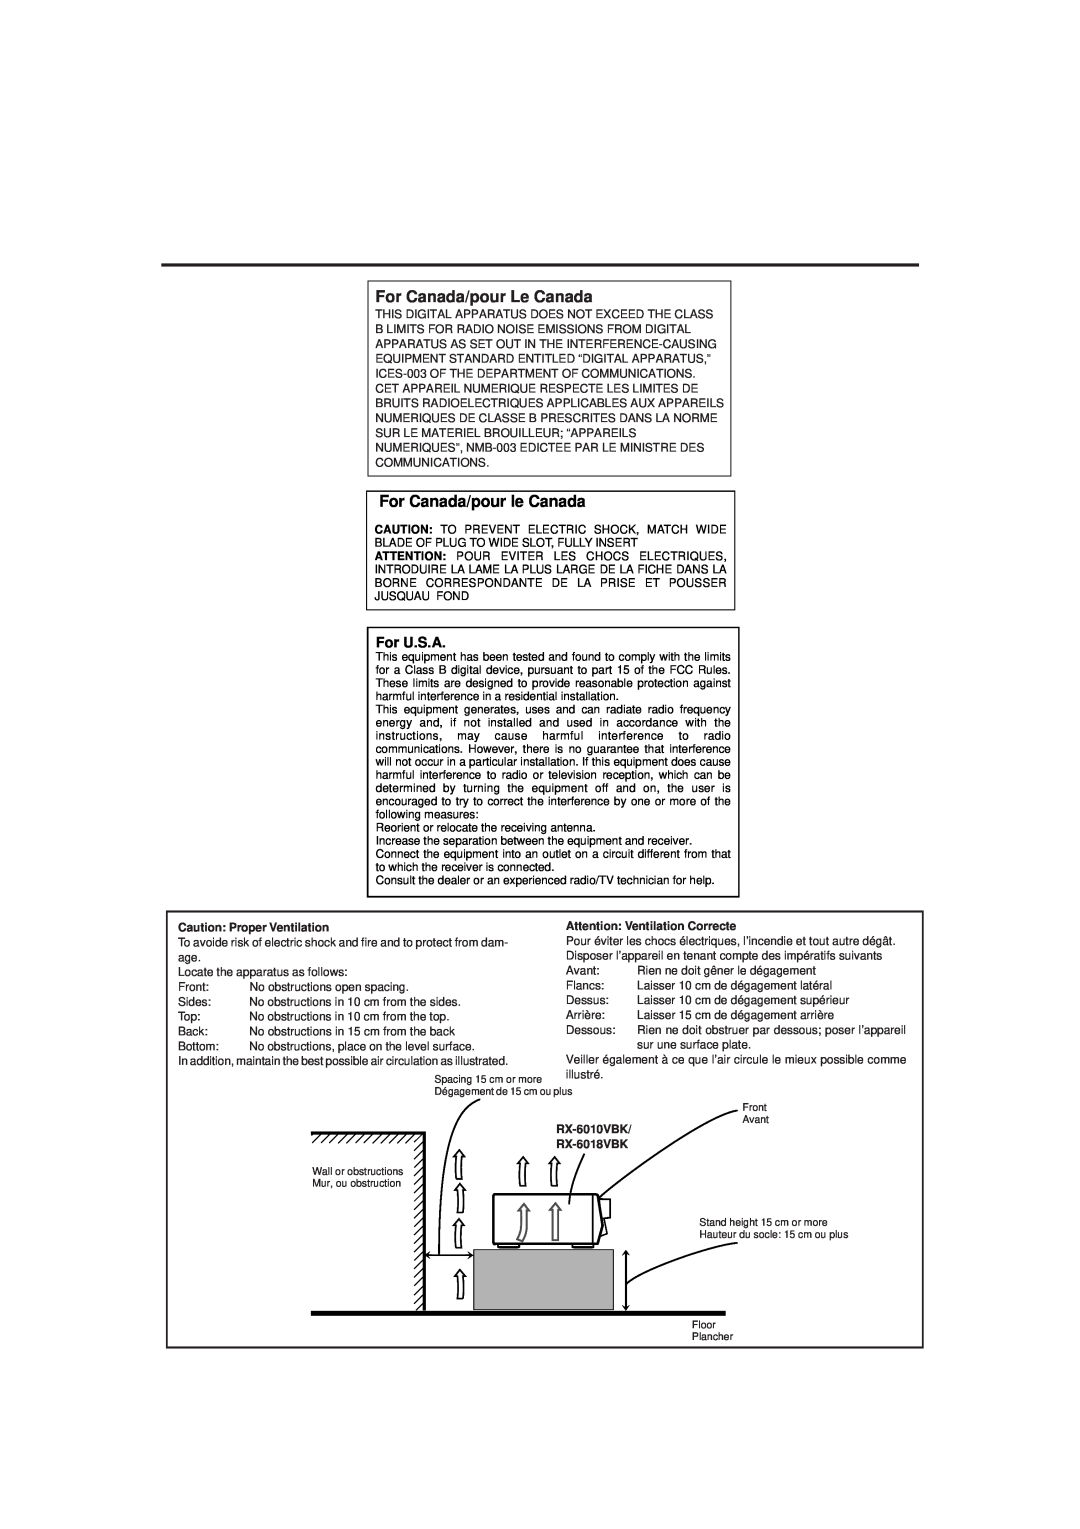 JVC RX-6018VBK manual For Canada/pour Le Canada, For Canada/pour le Canada, For U.S.A, Caution Proper Ventilation 